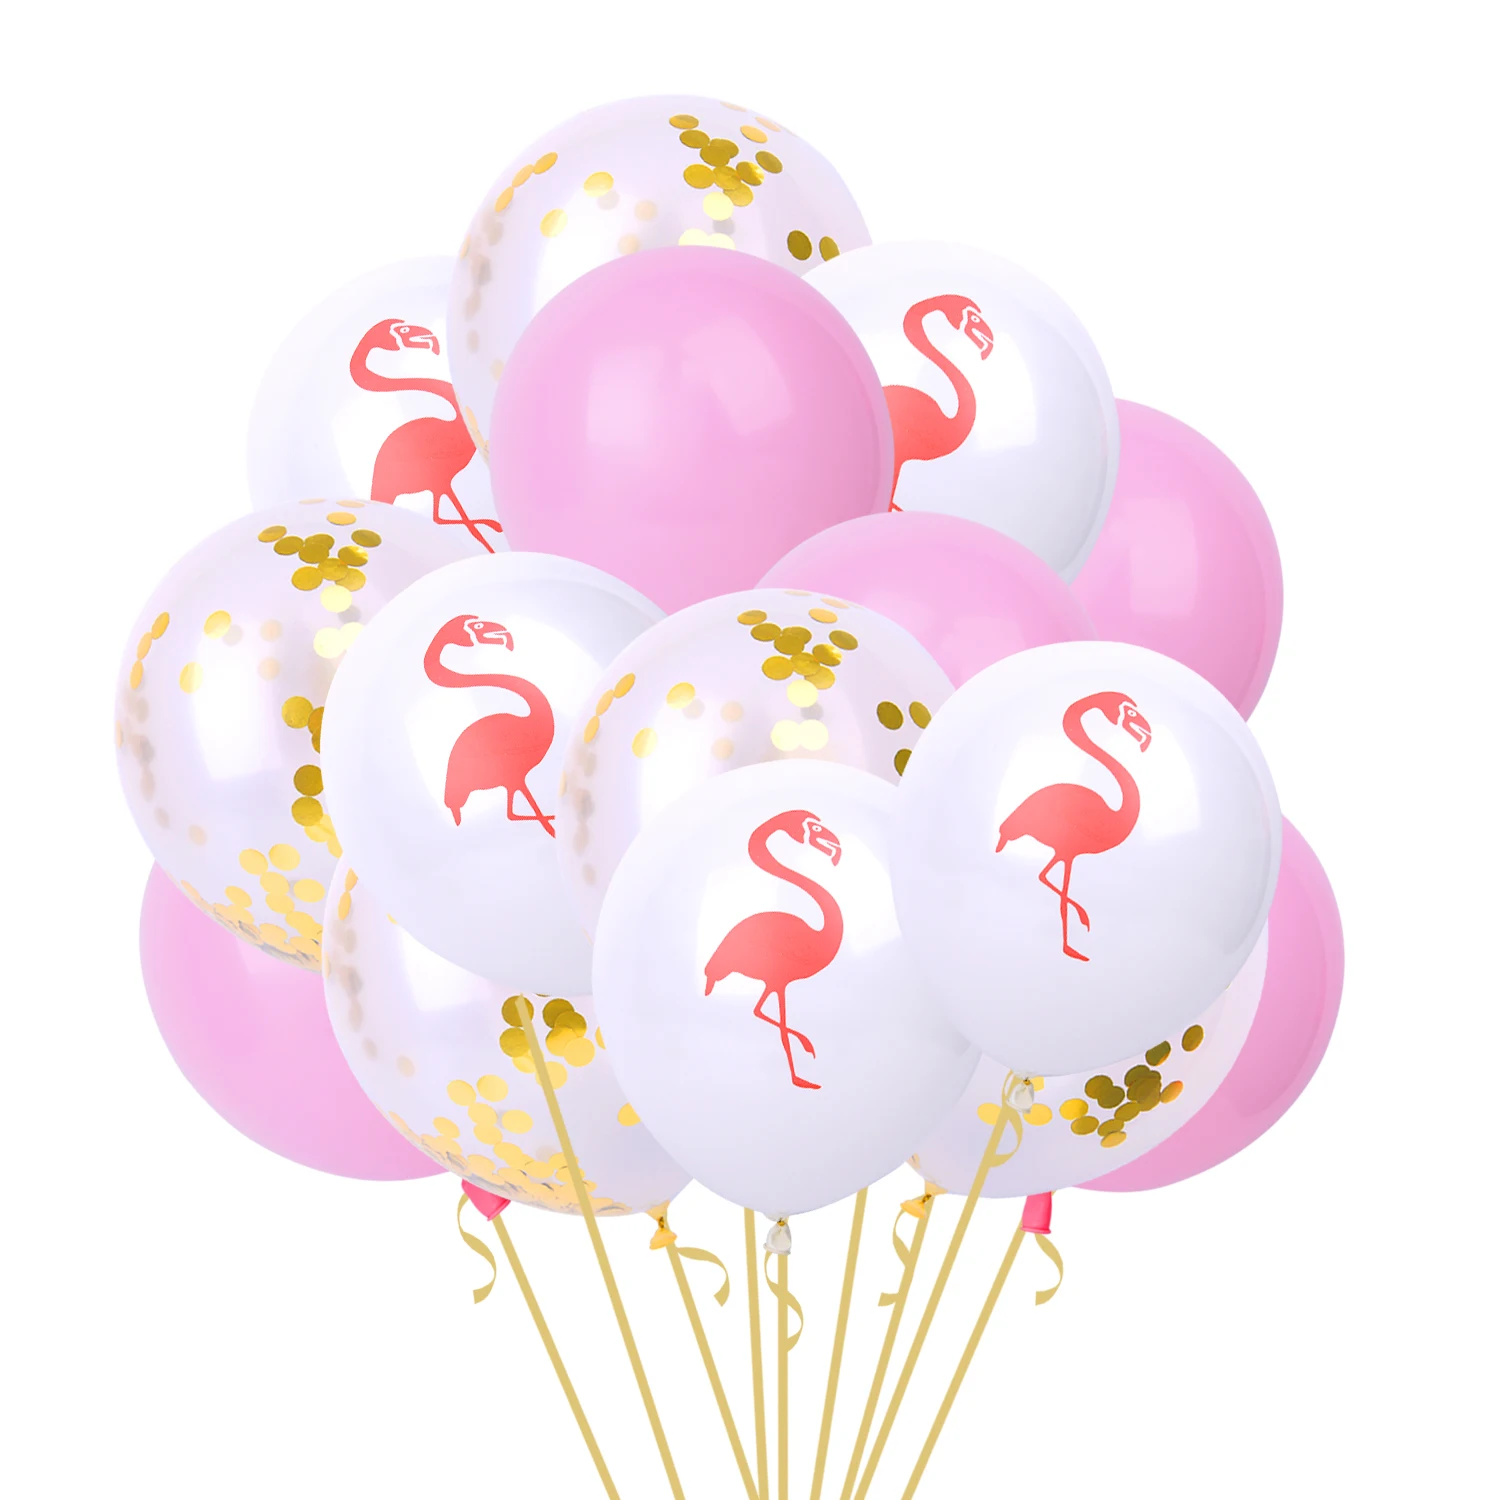 15pcs Set Latex Confetti Balloons Wedding Birthday Party Backdrop Decor 12 inch